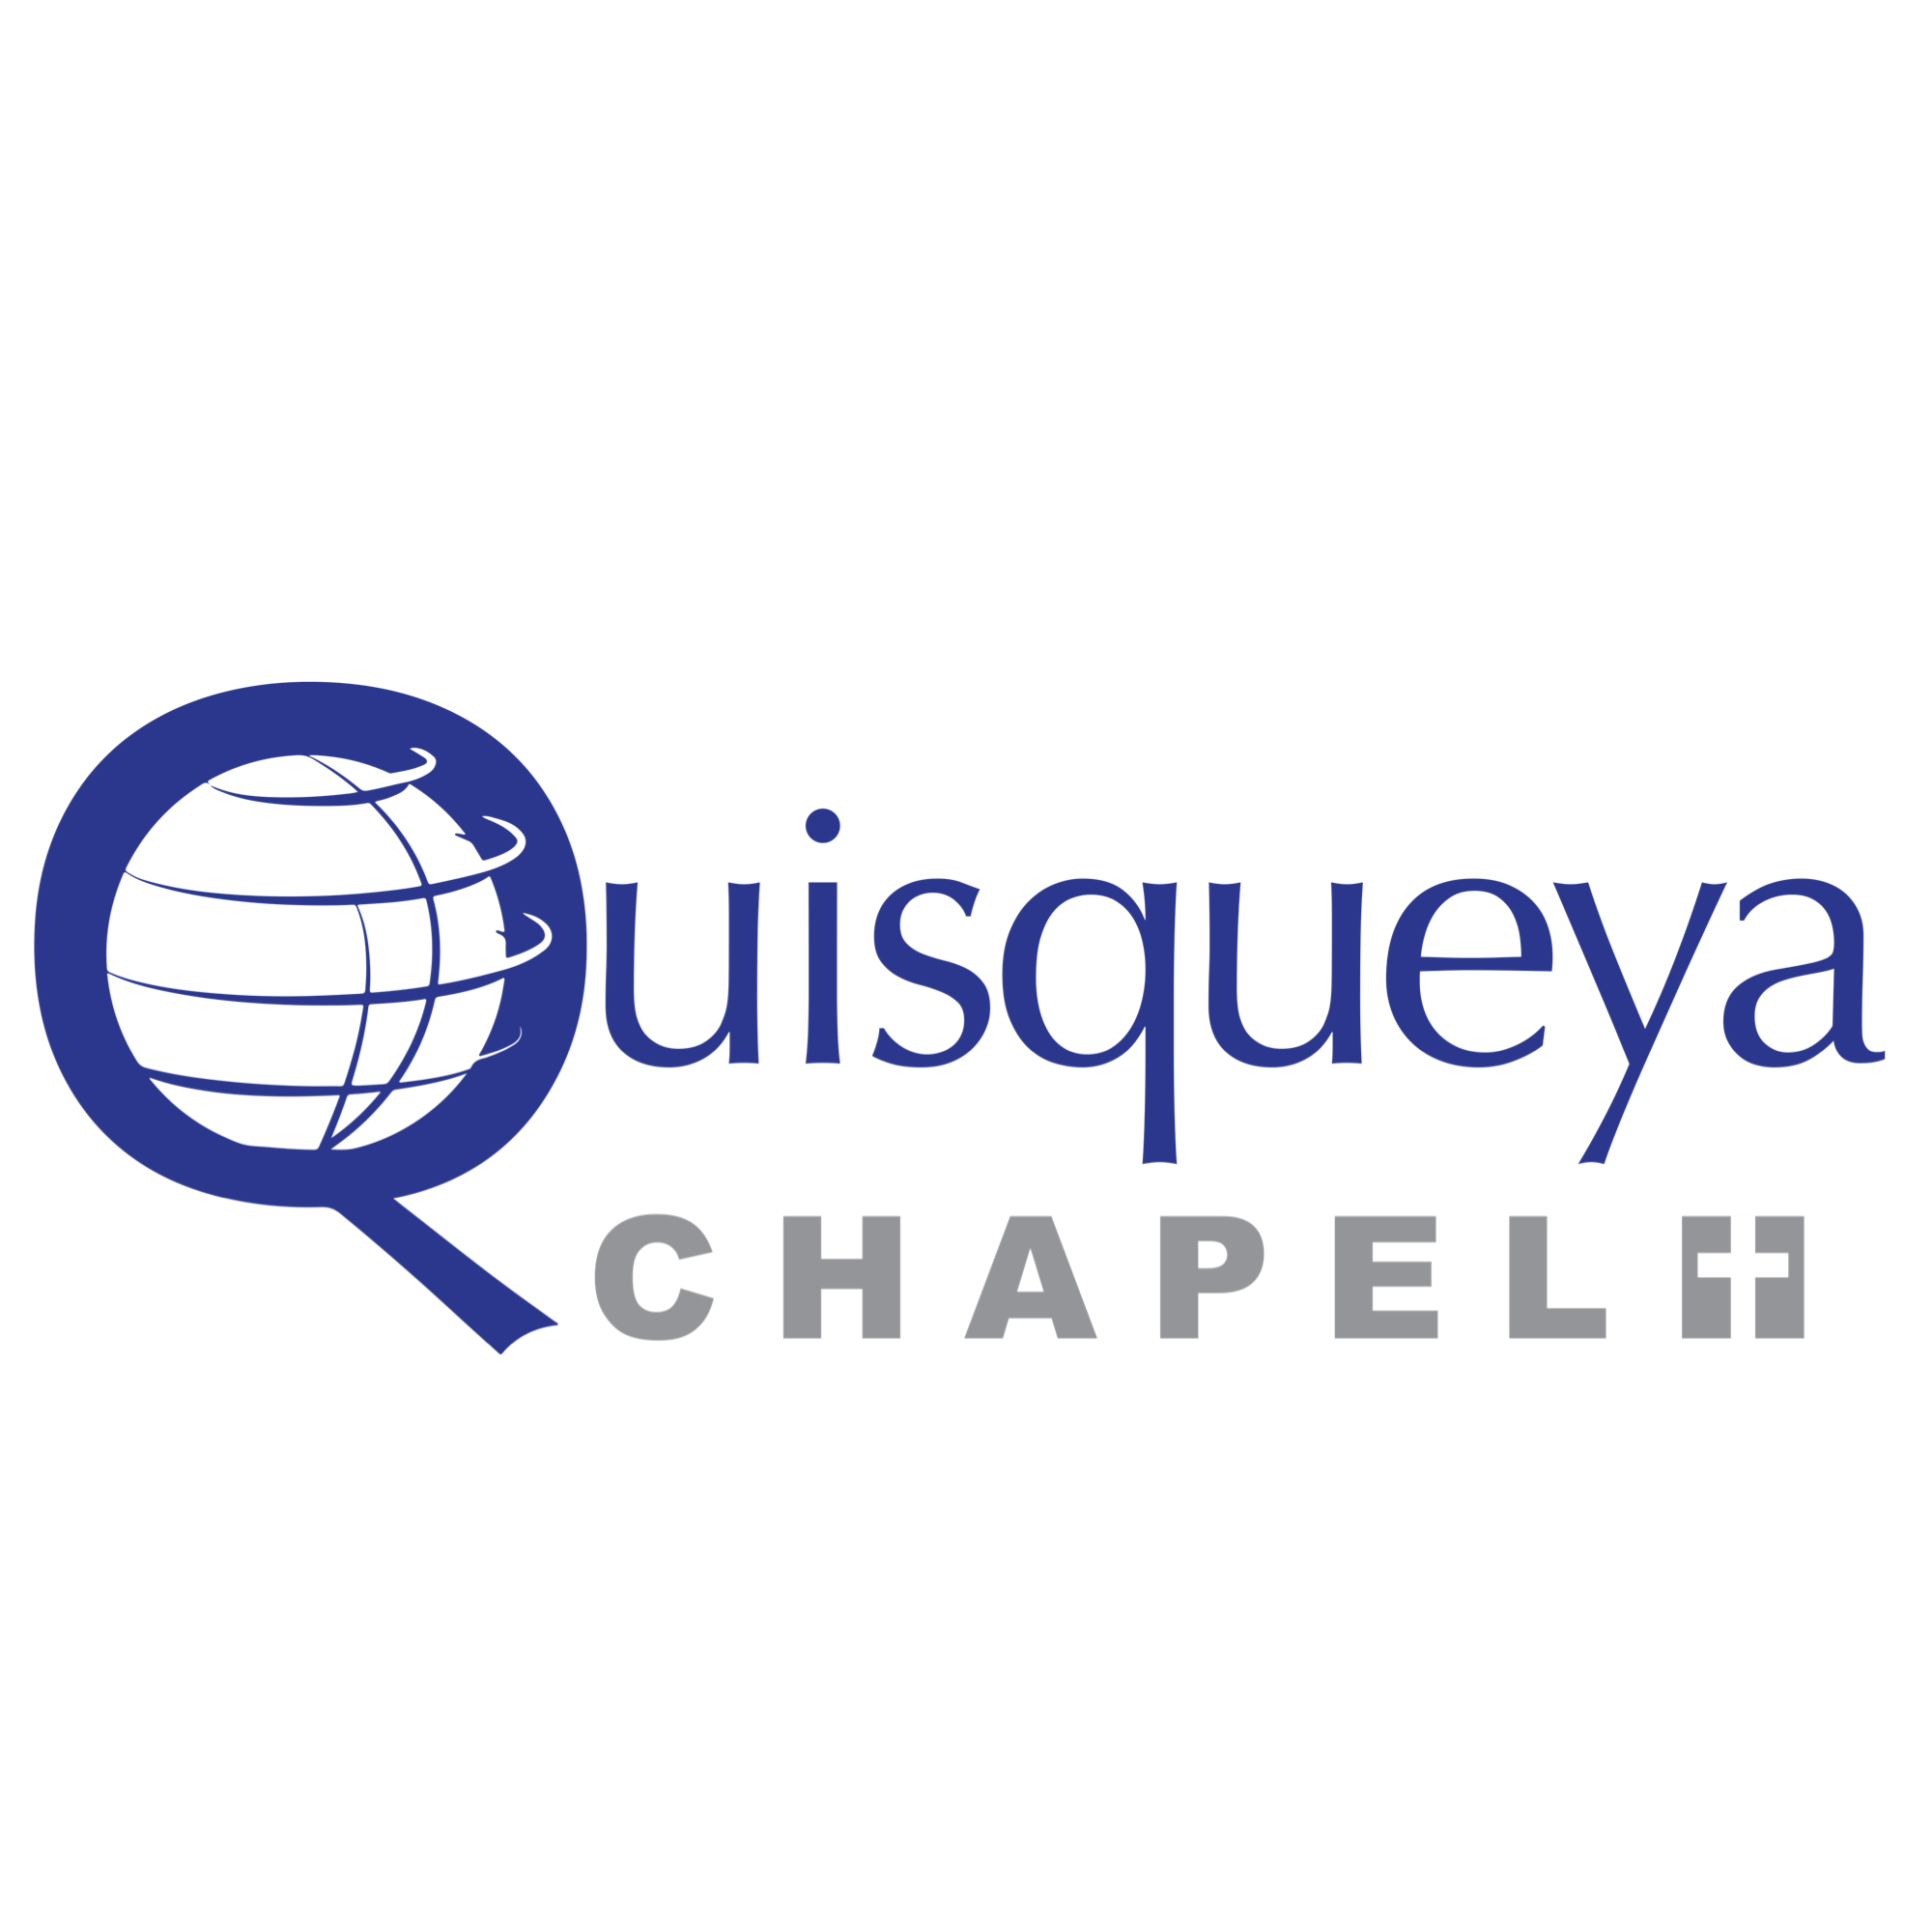 Quisqueya Chapel - Haiti